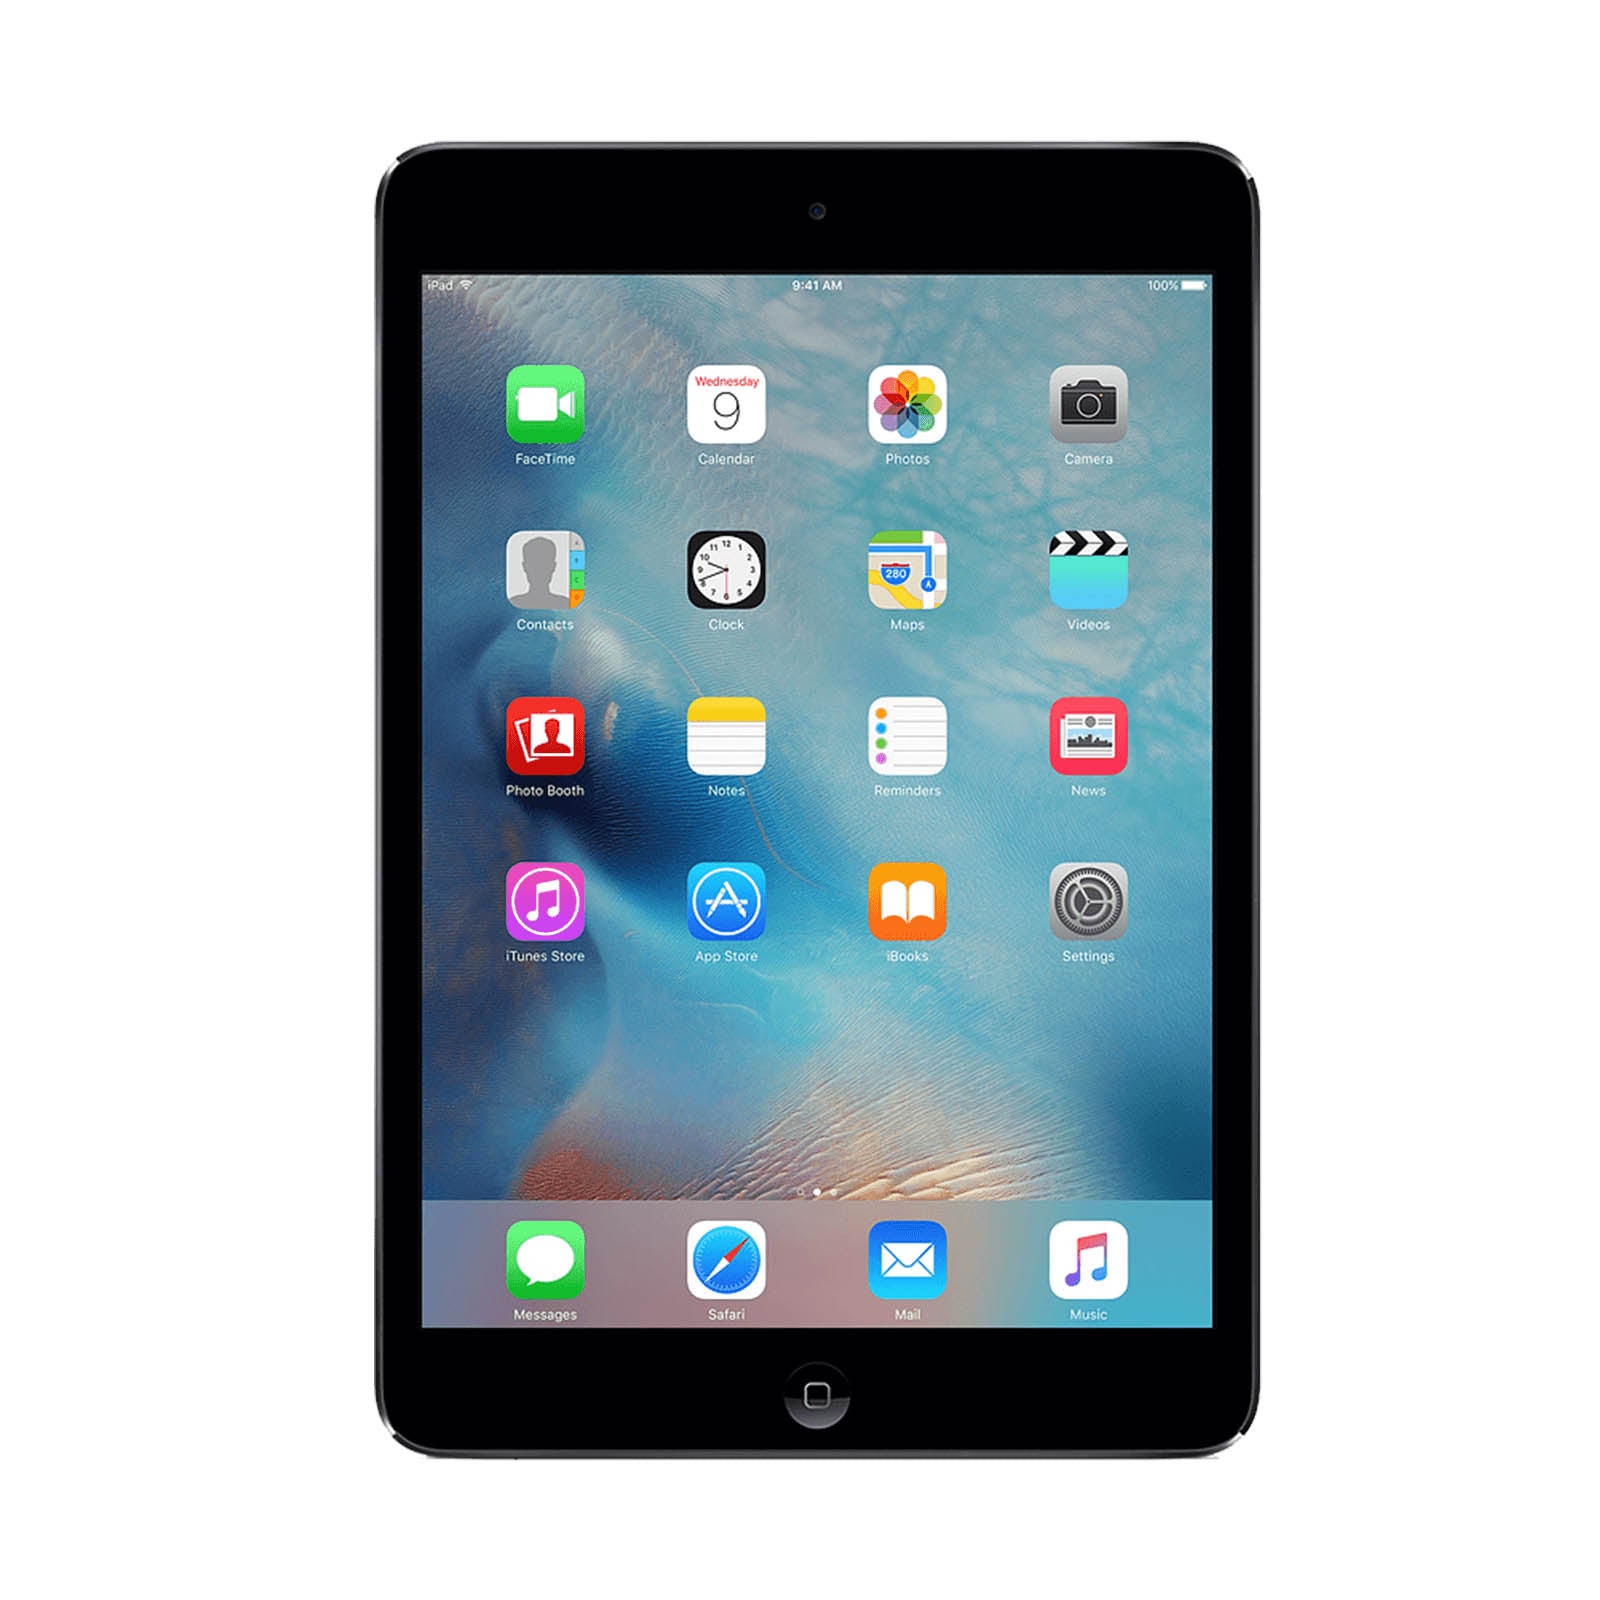 Apple iPad mini 3 16GB Space Grey Fair- Unlocked